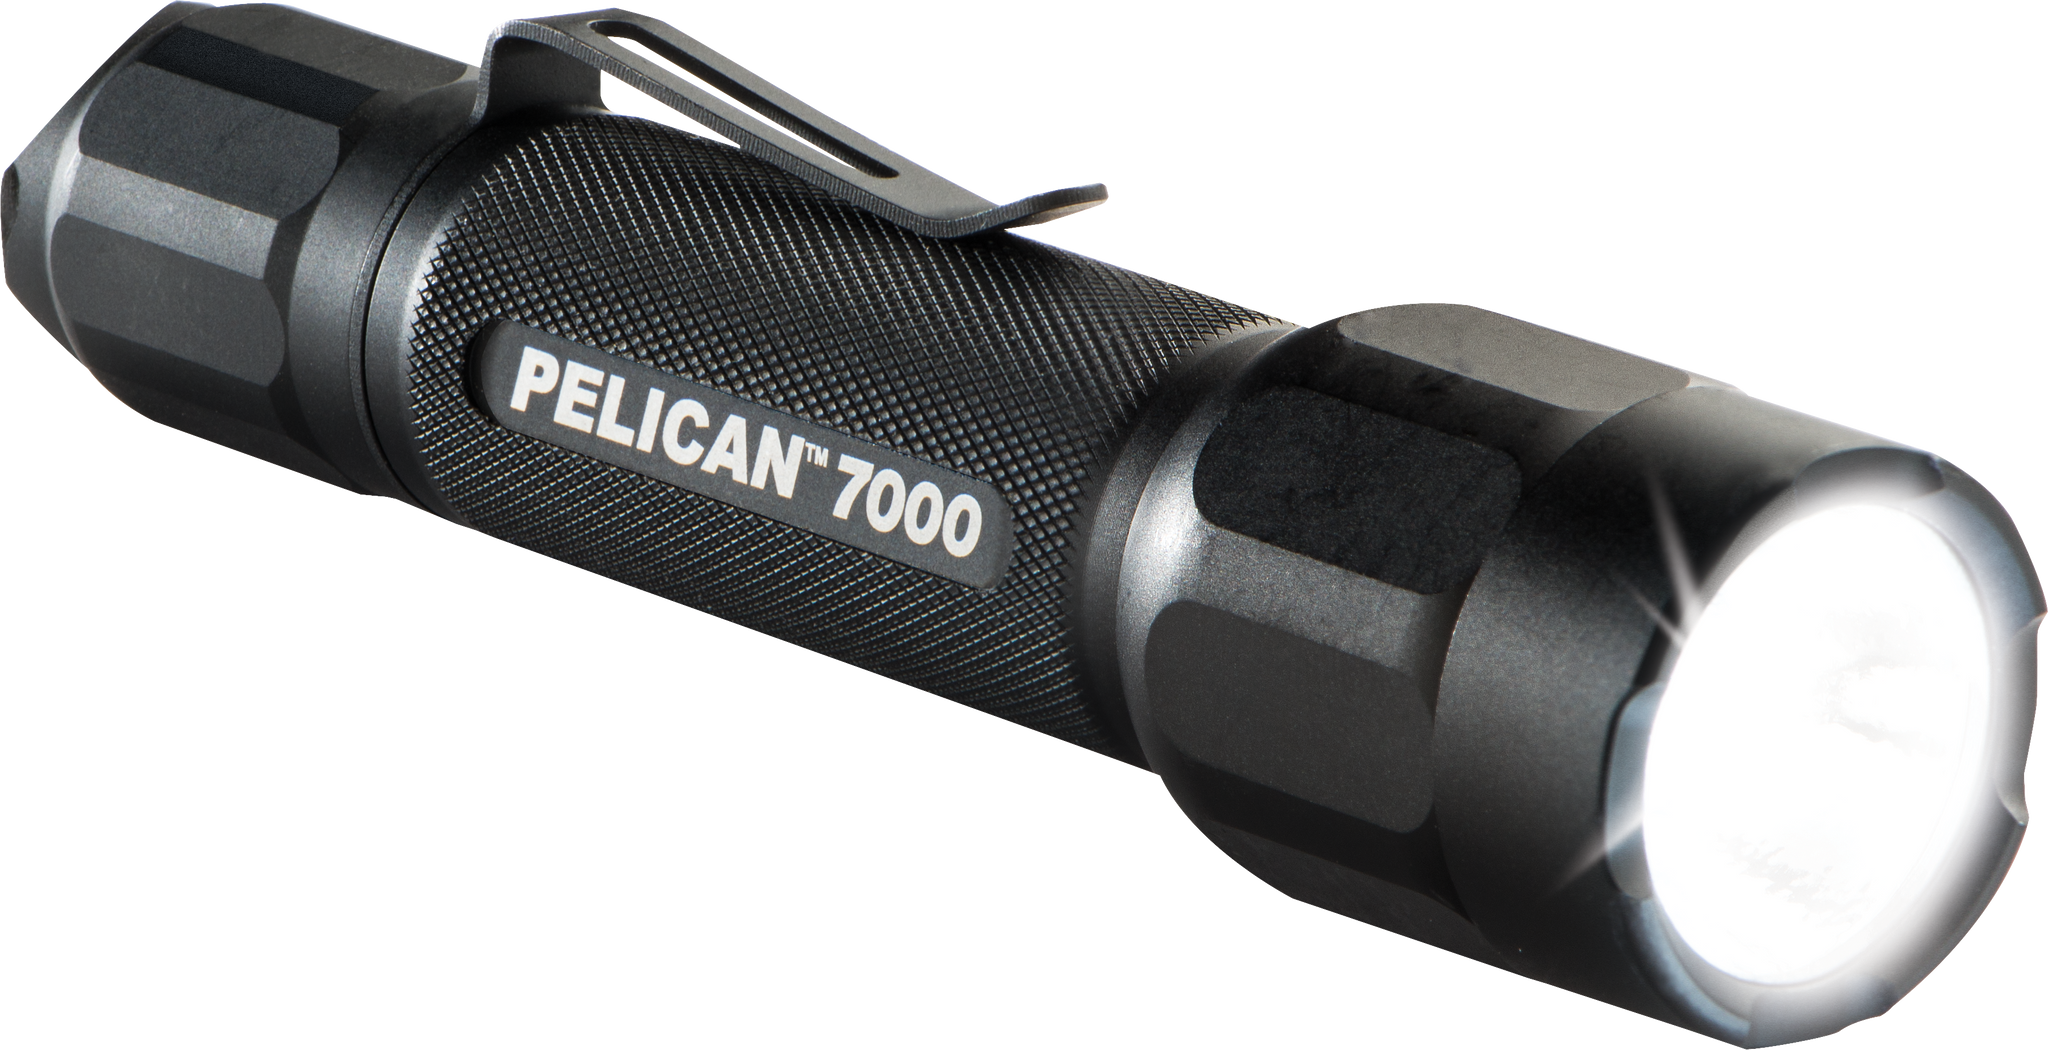 Pelican 7610 Tactical Flashlight Dealerwholesale Dealers